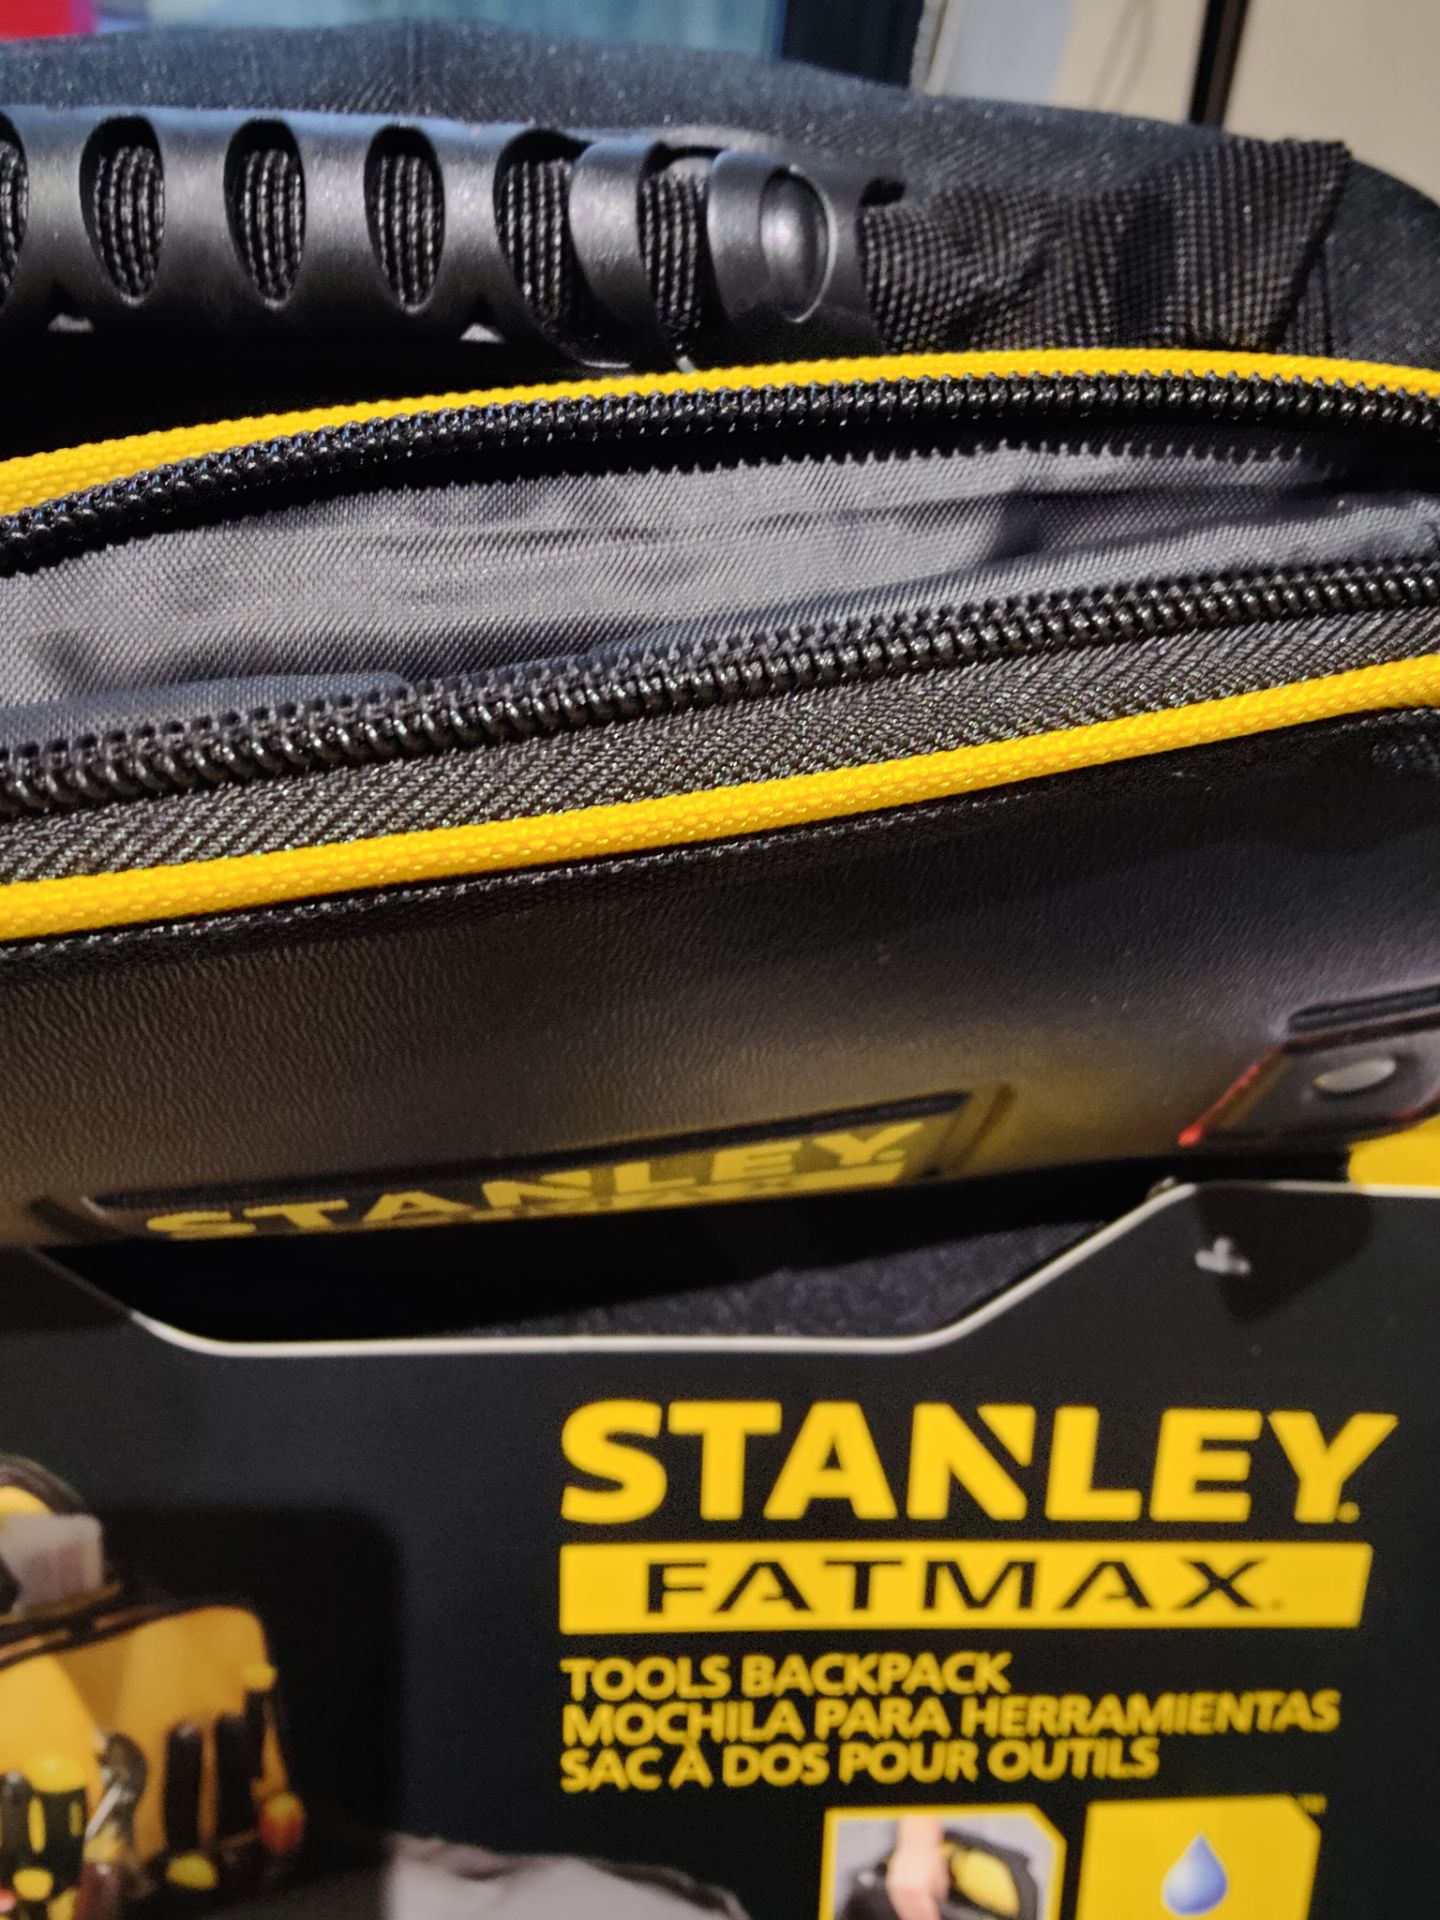 Stanley 1-95-611 Fatmax Tool Backpack - Image 4 of 8